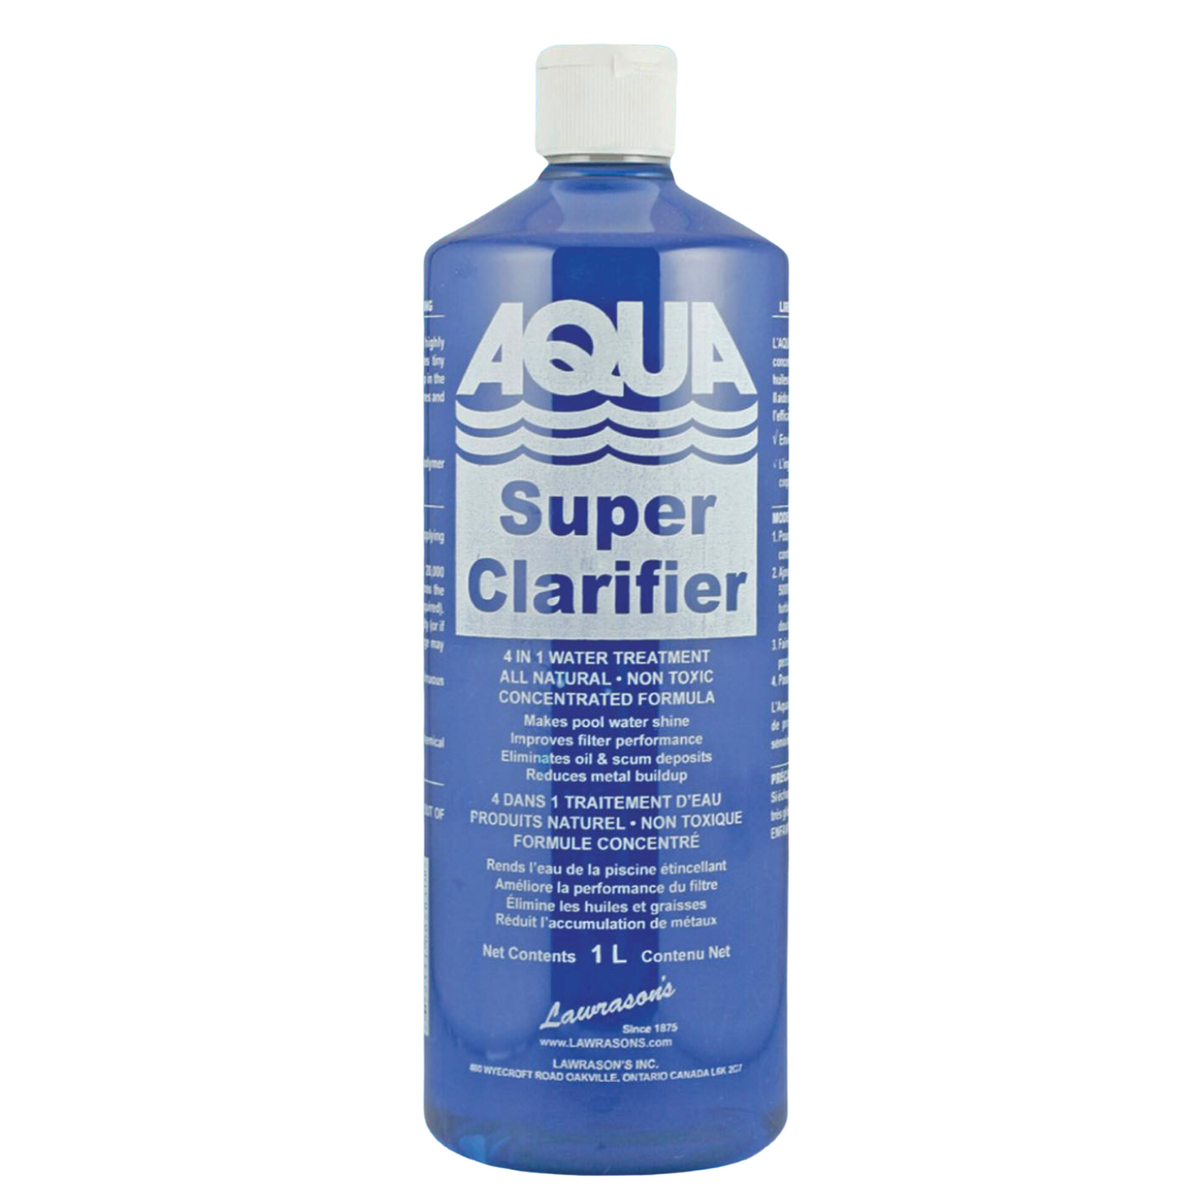 Aqua Super Clarifier - “4 in 1” Water Treatment